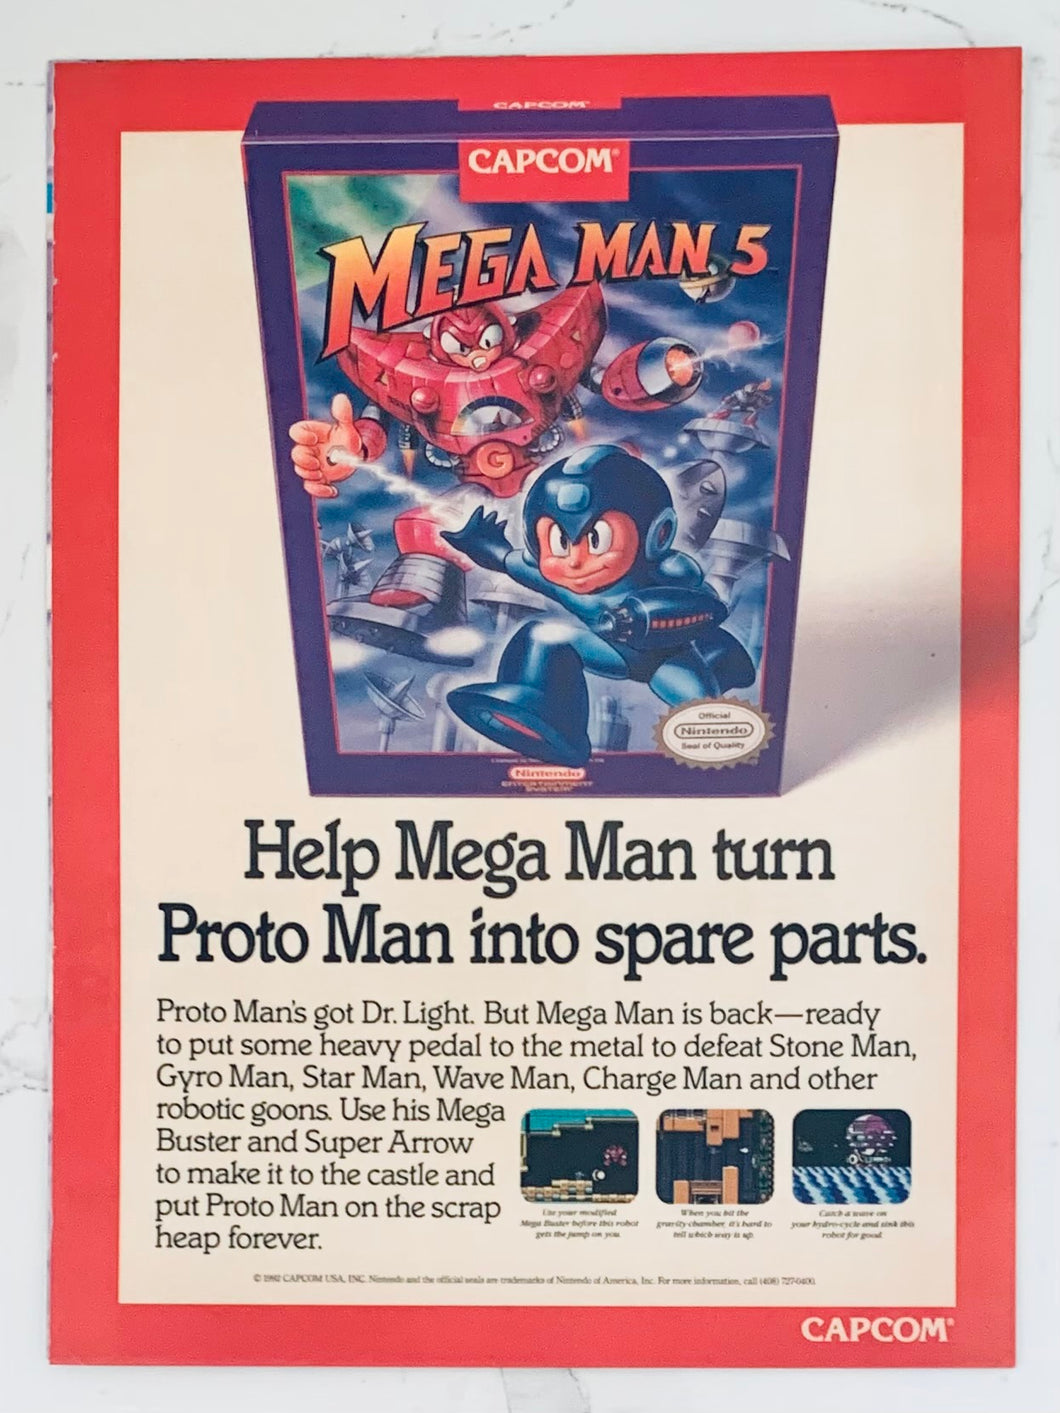 Mega Man 5 - Nintendo NES - Original Vintage Advertisement - Print Ads - Laminated A4 Poster